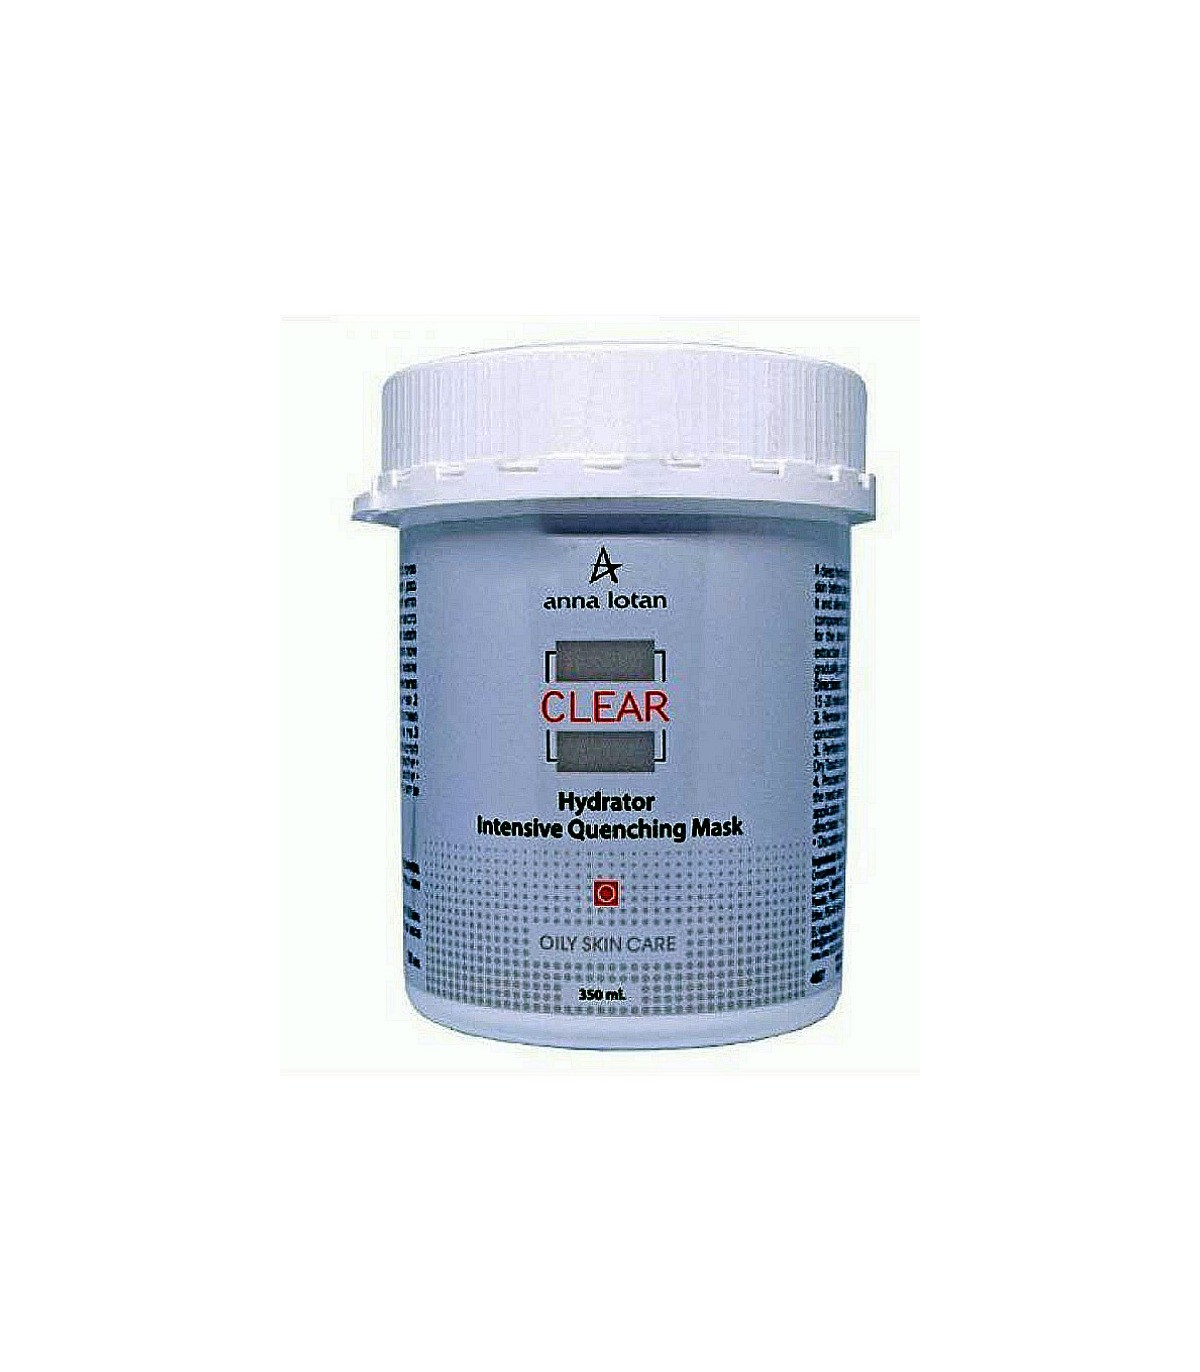 Anna Lotan - Clear - Hydrator Intensive Quenching Mask - 350 ml 12fl.oz